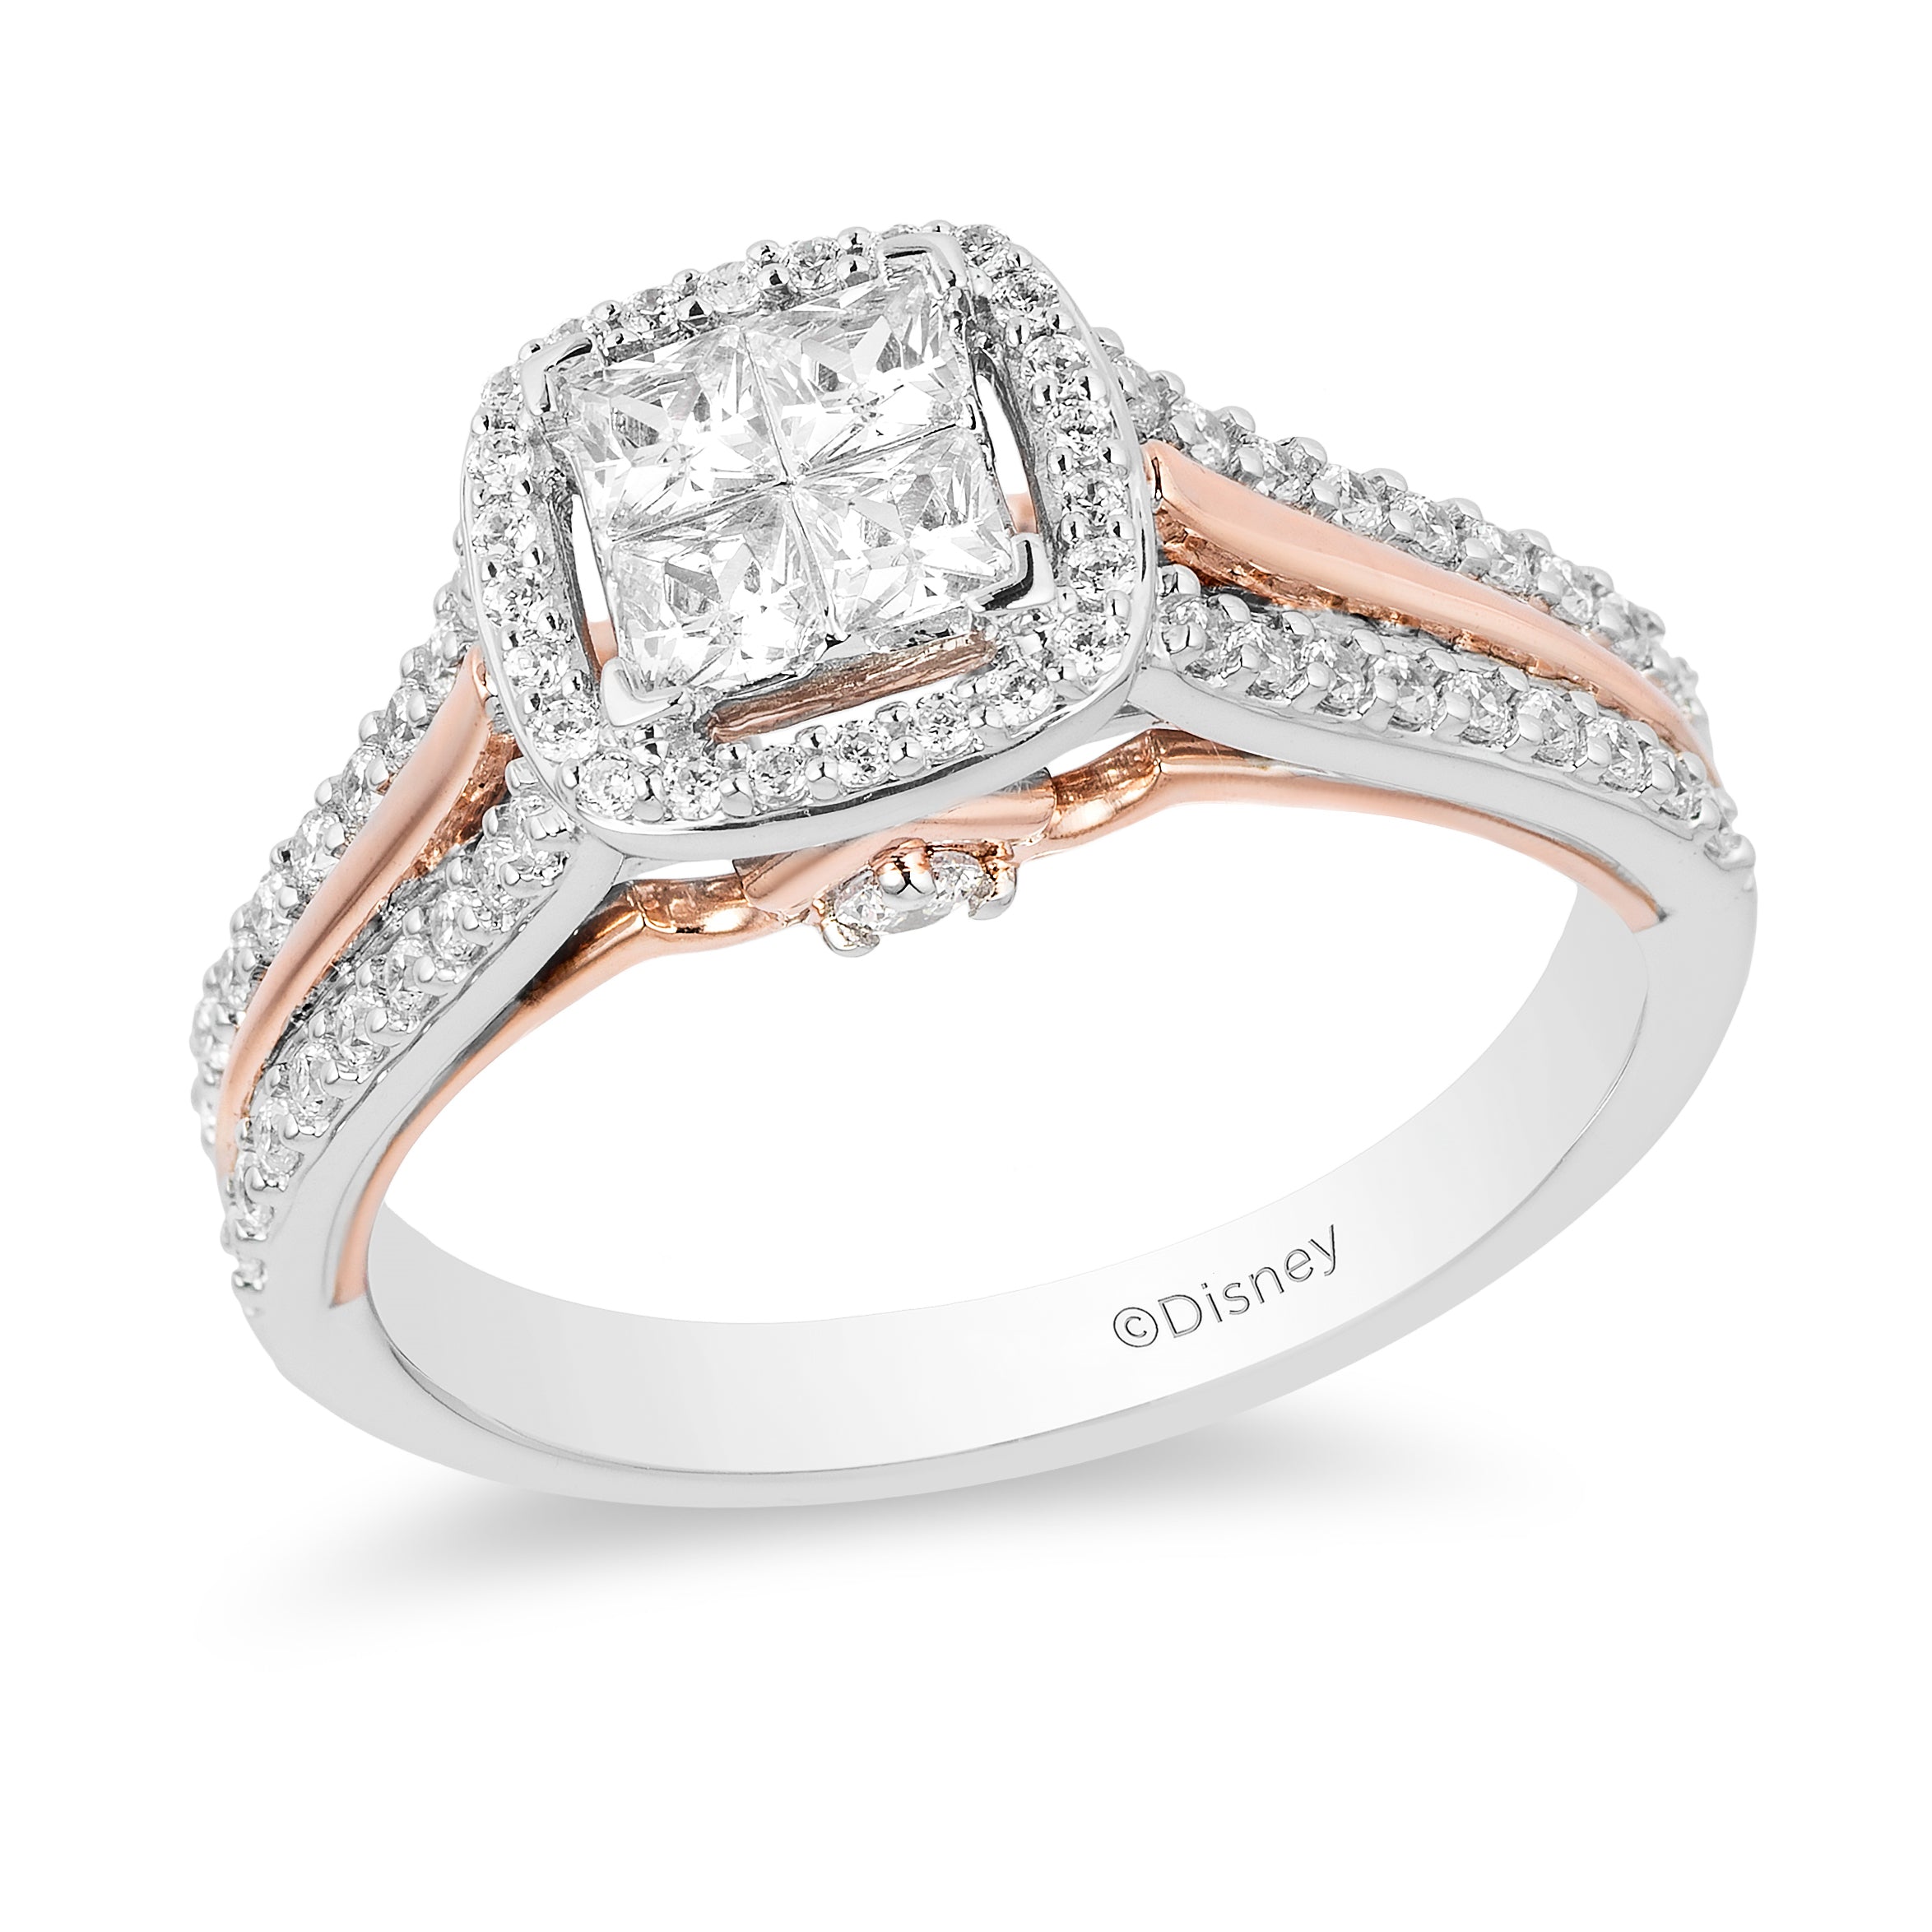 Buy Aurora Diamond Ring At Best Price | Karuri Jewellers